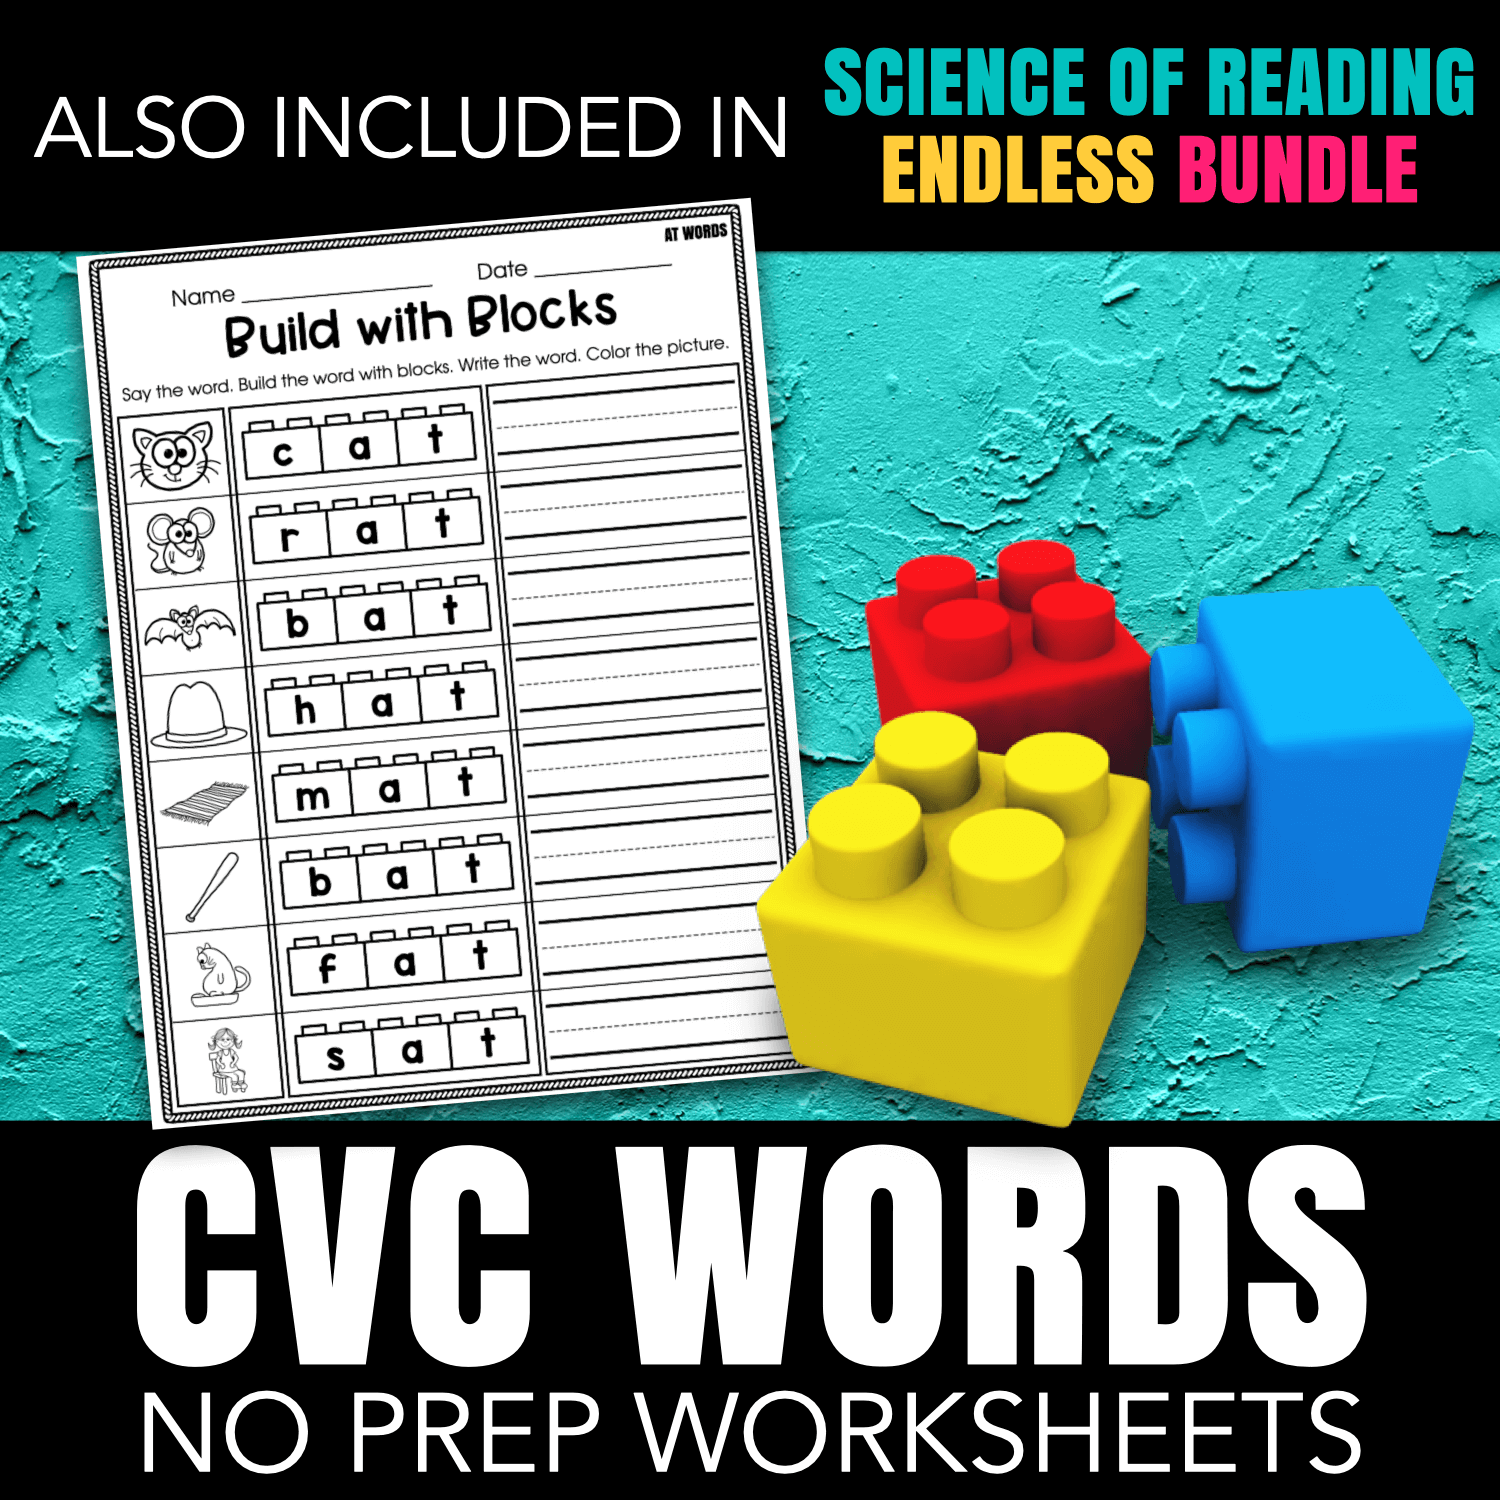 CVC Words Worksheets to Practice Short Vowels